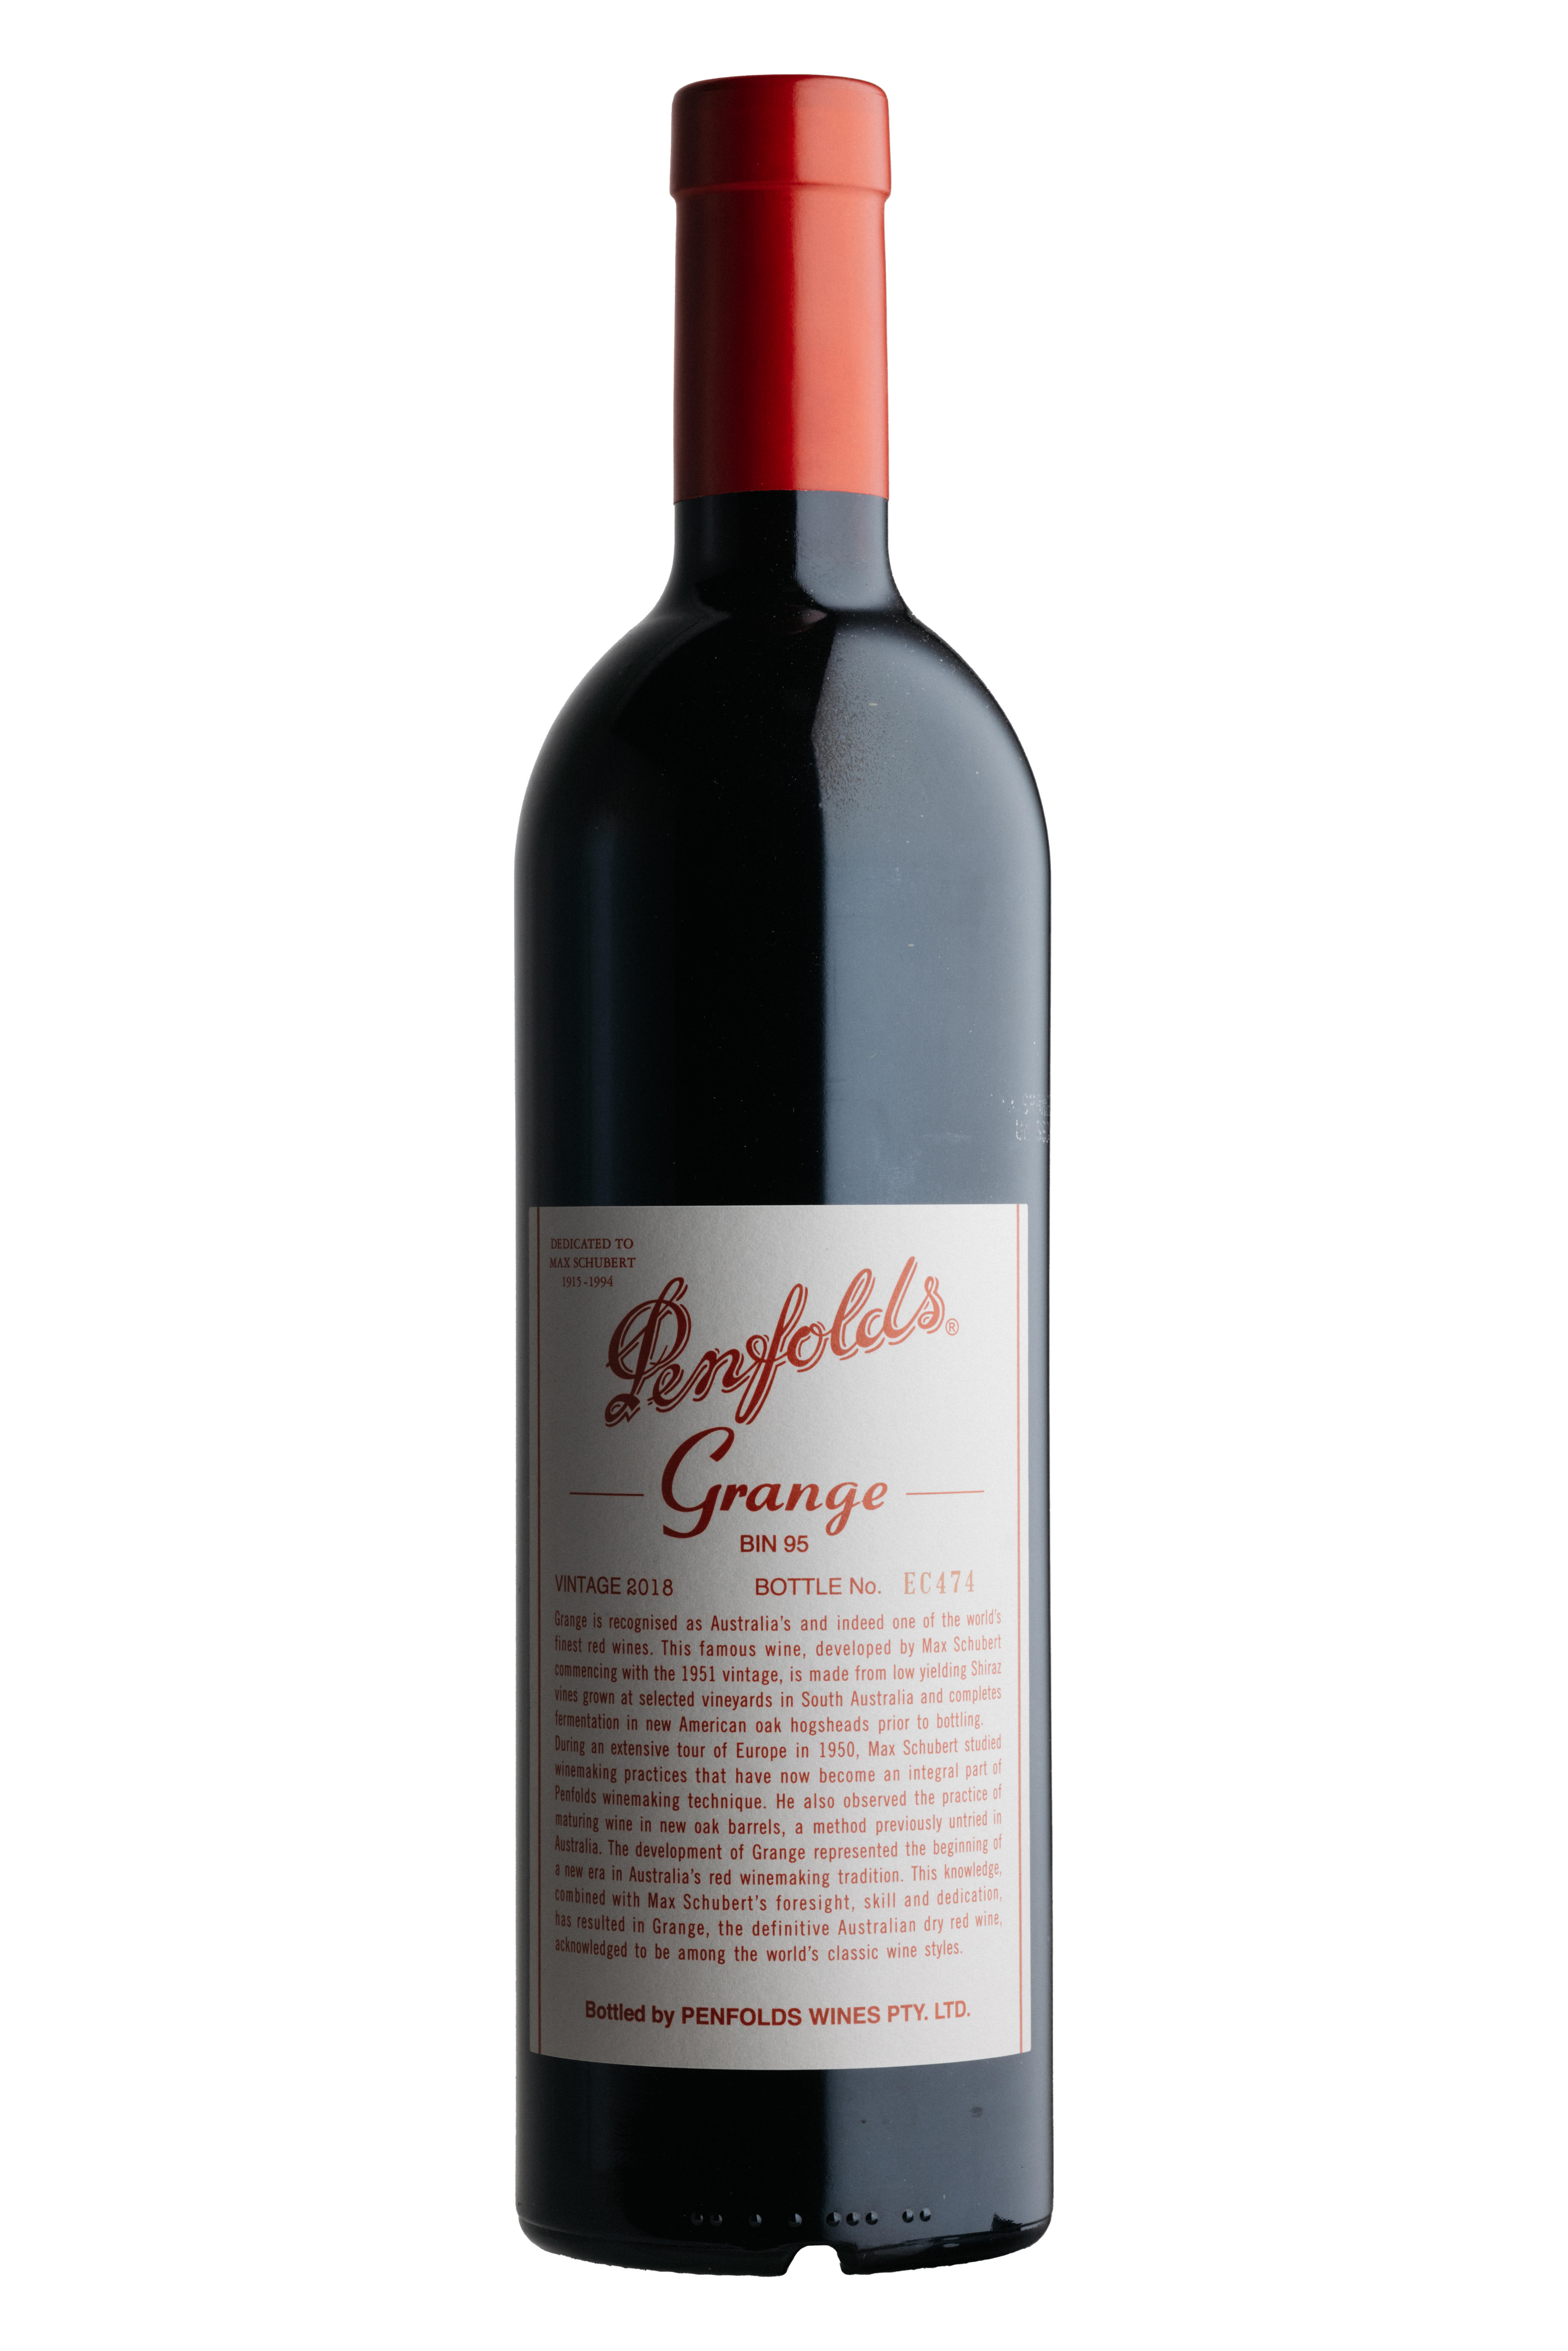 Buy 2018 Penfolds, Grange, Bin 95, Australia Wine - Berry Bros. & Rudd